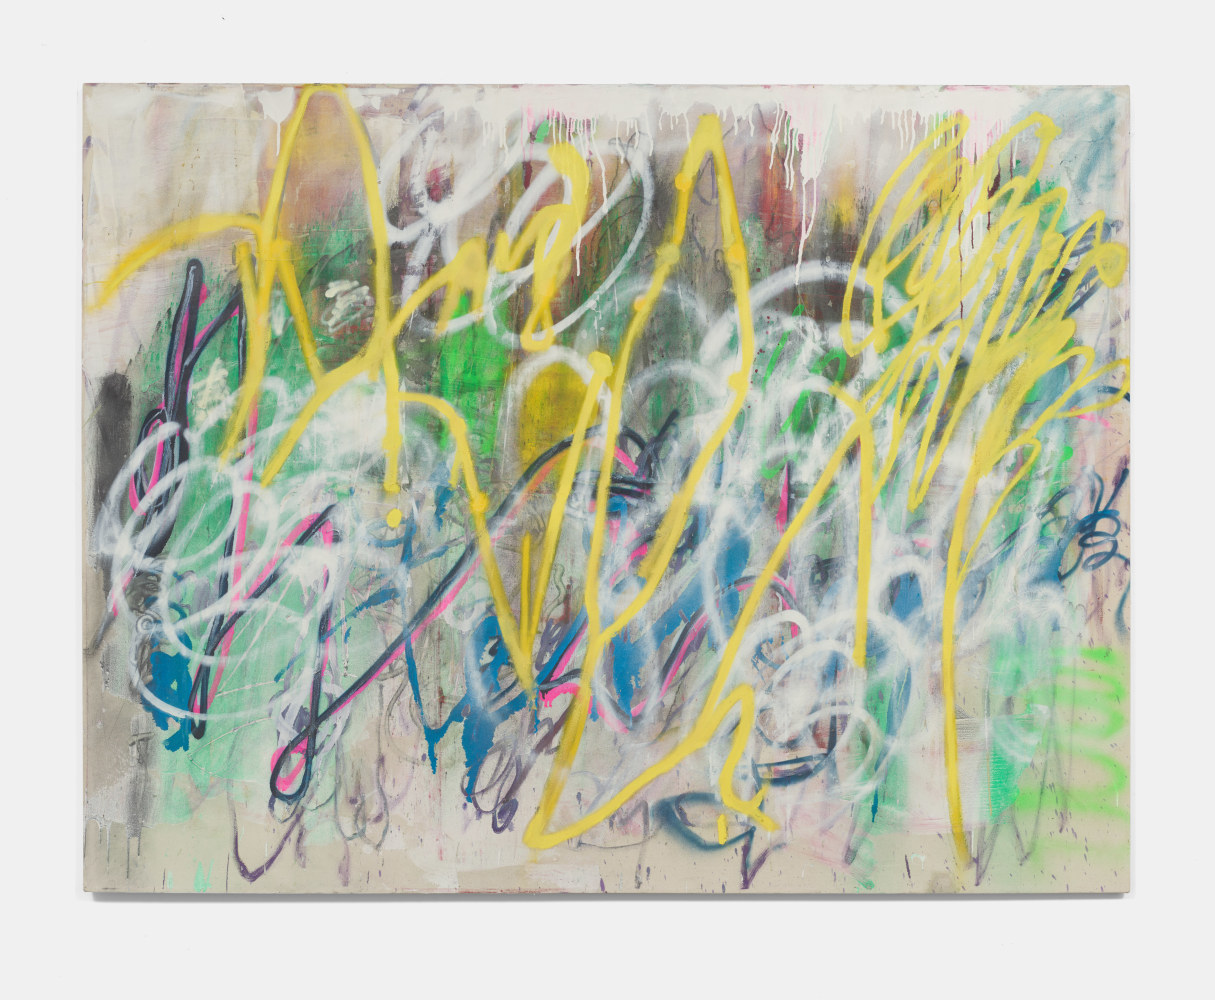 Jan-Henri Booyens
Meglomaniac mind control, 2021
Oil Paint and Montana spray paint on canvas
67h x 86.75w x 1.63d in
170.18h x 220.35w x 4.13d cm